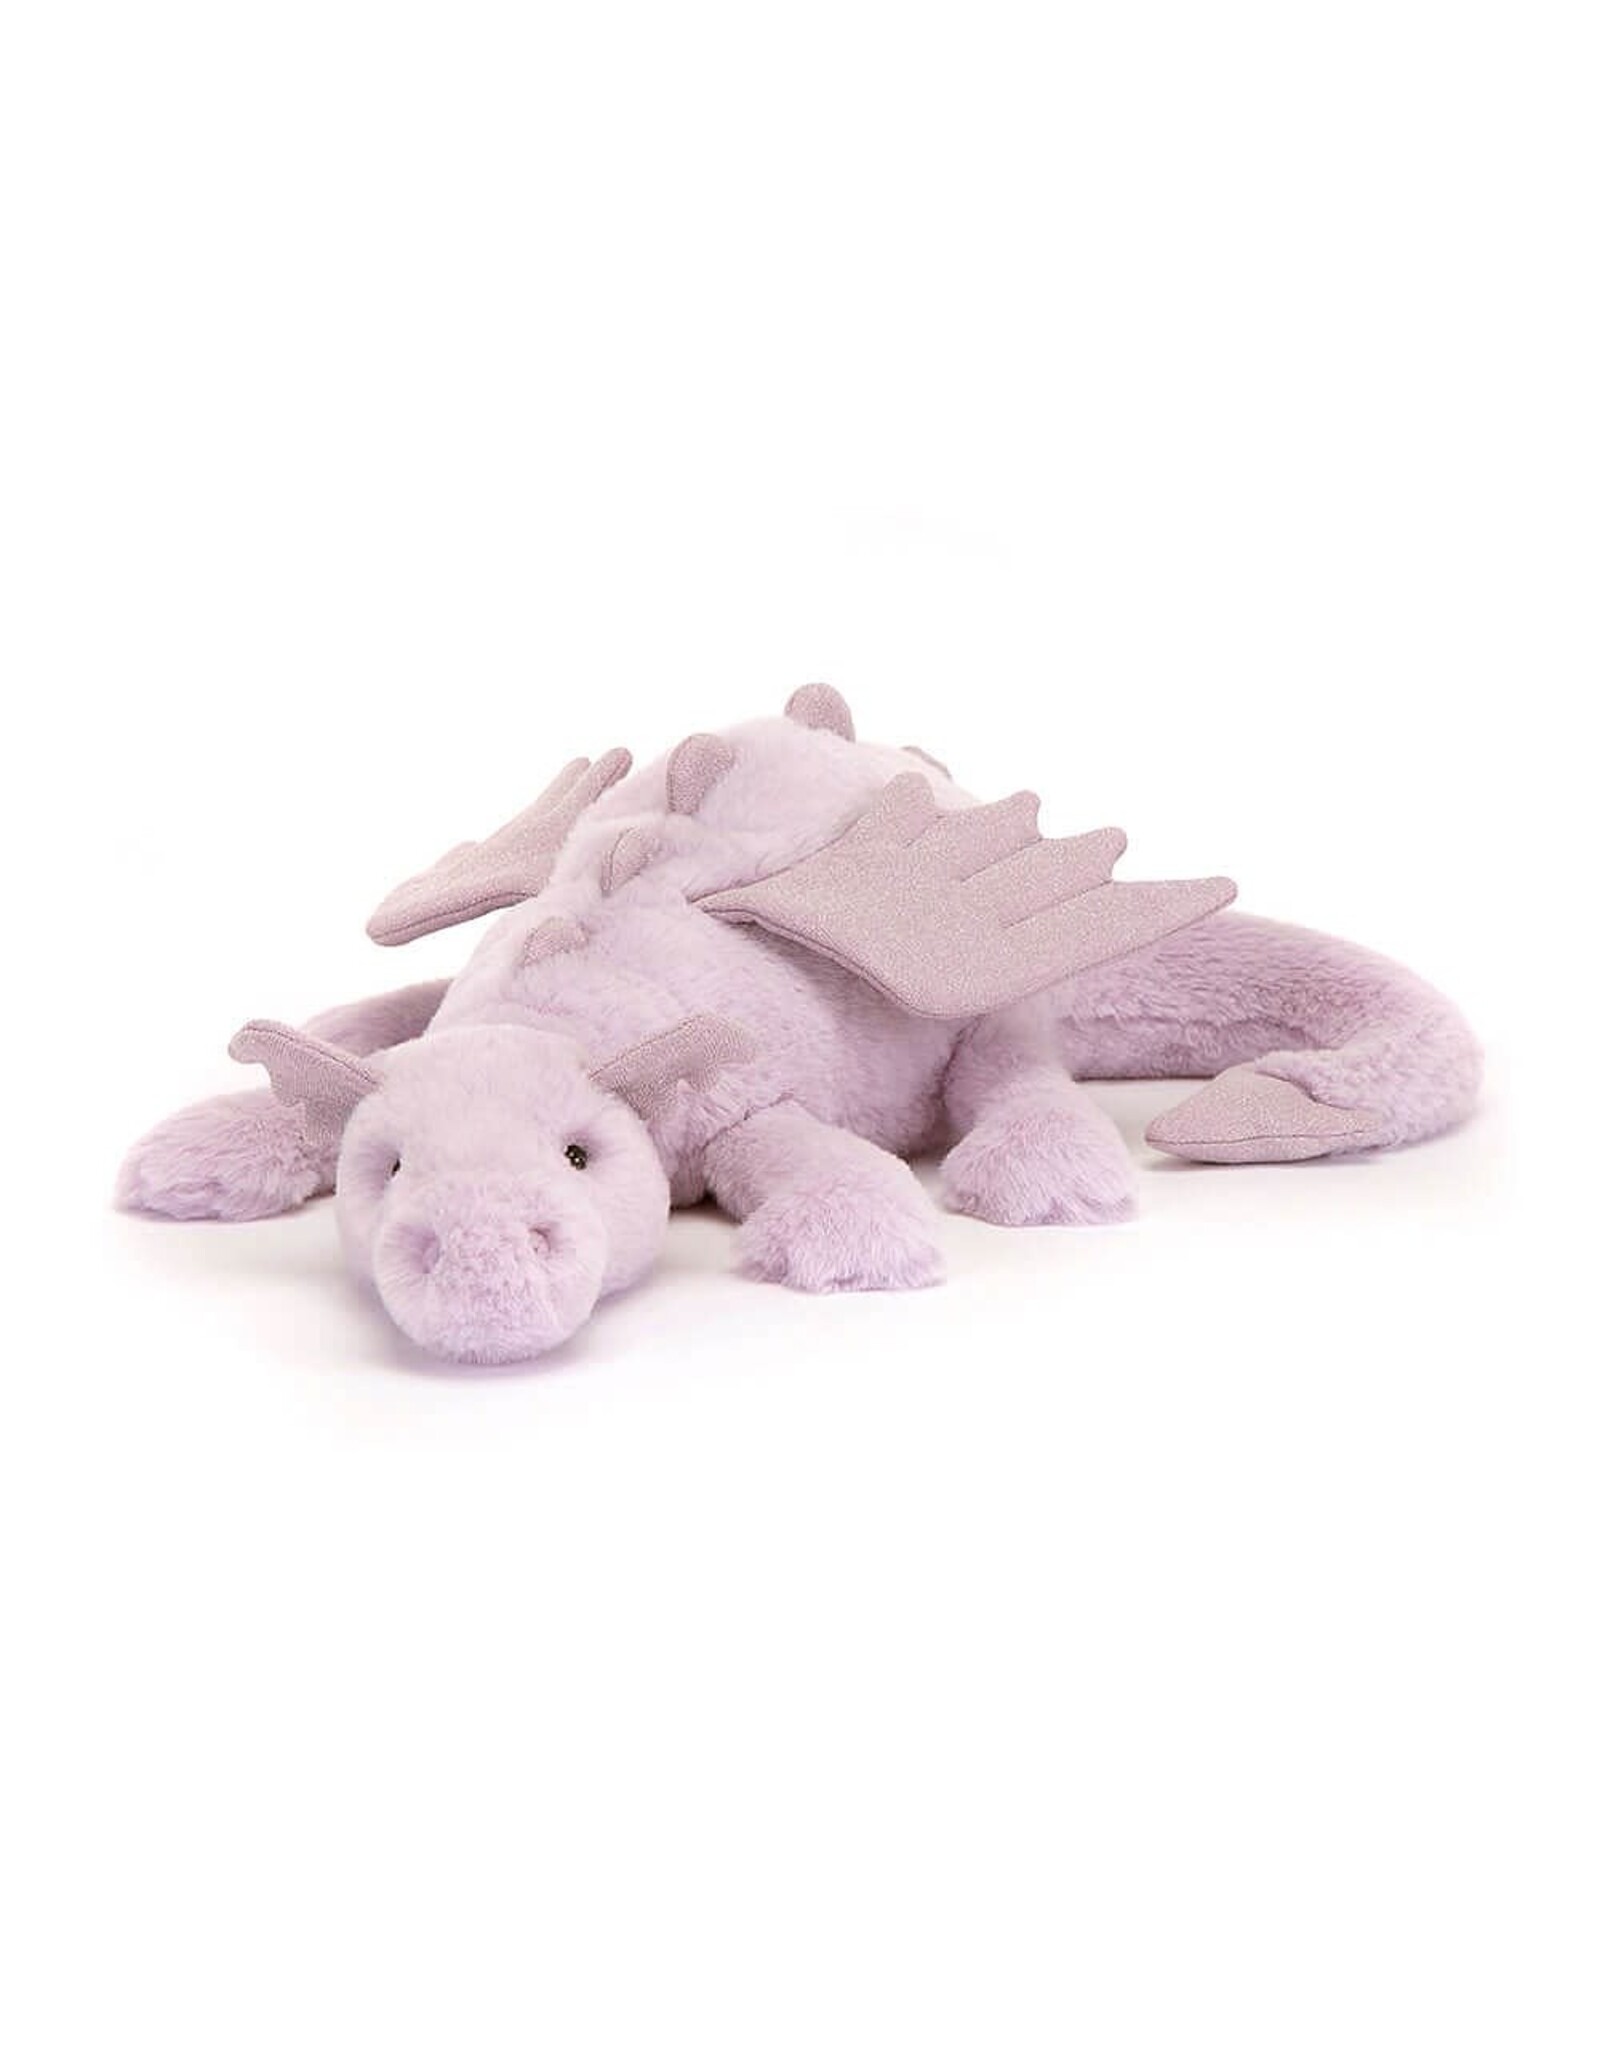 Jellycat Knuffel - Lavender Dragon